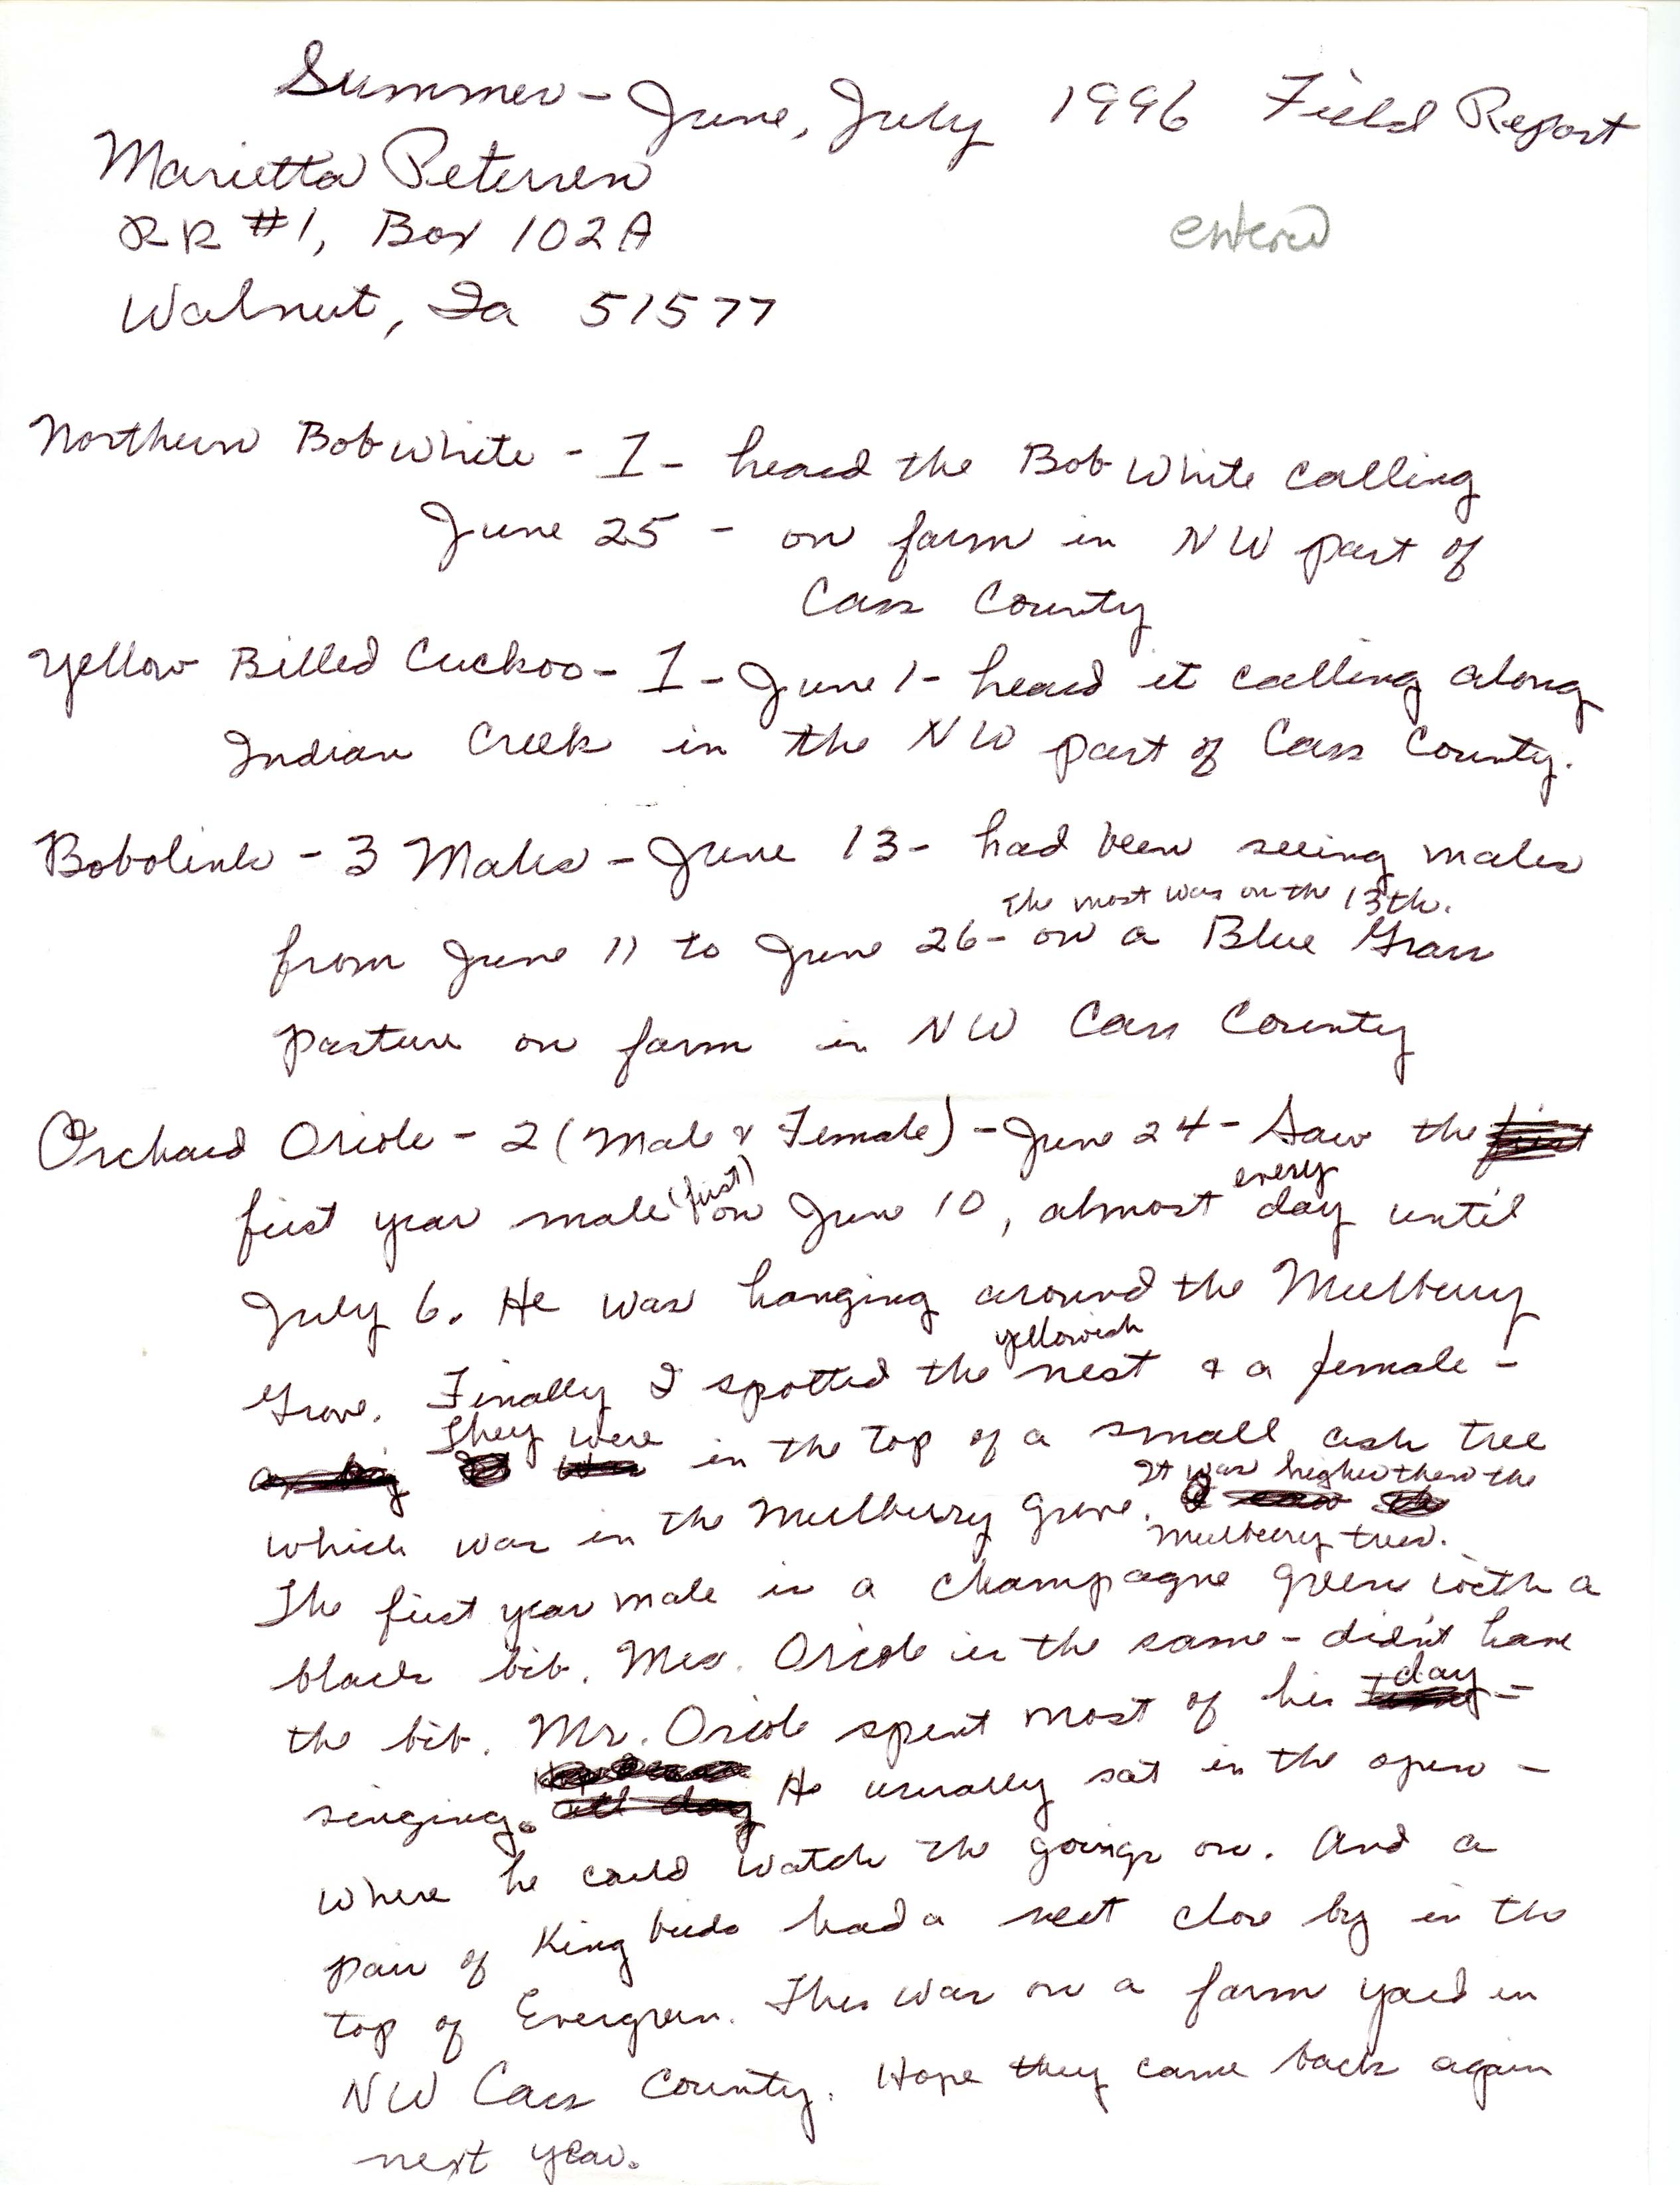 Field notes contributed by Marietta Petersen, summer 1996